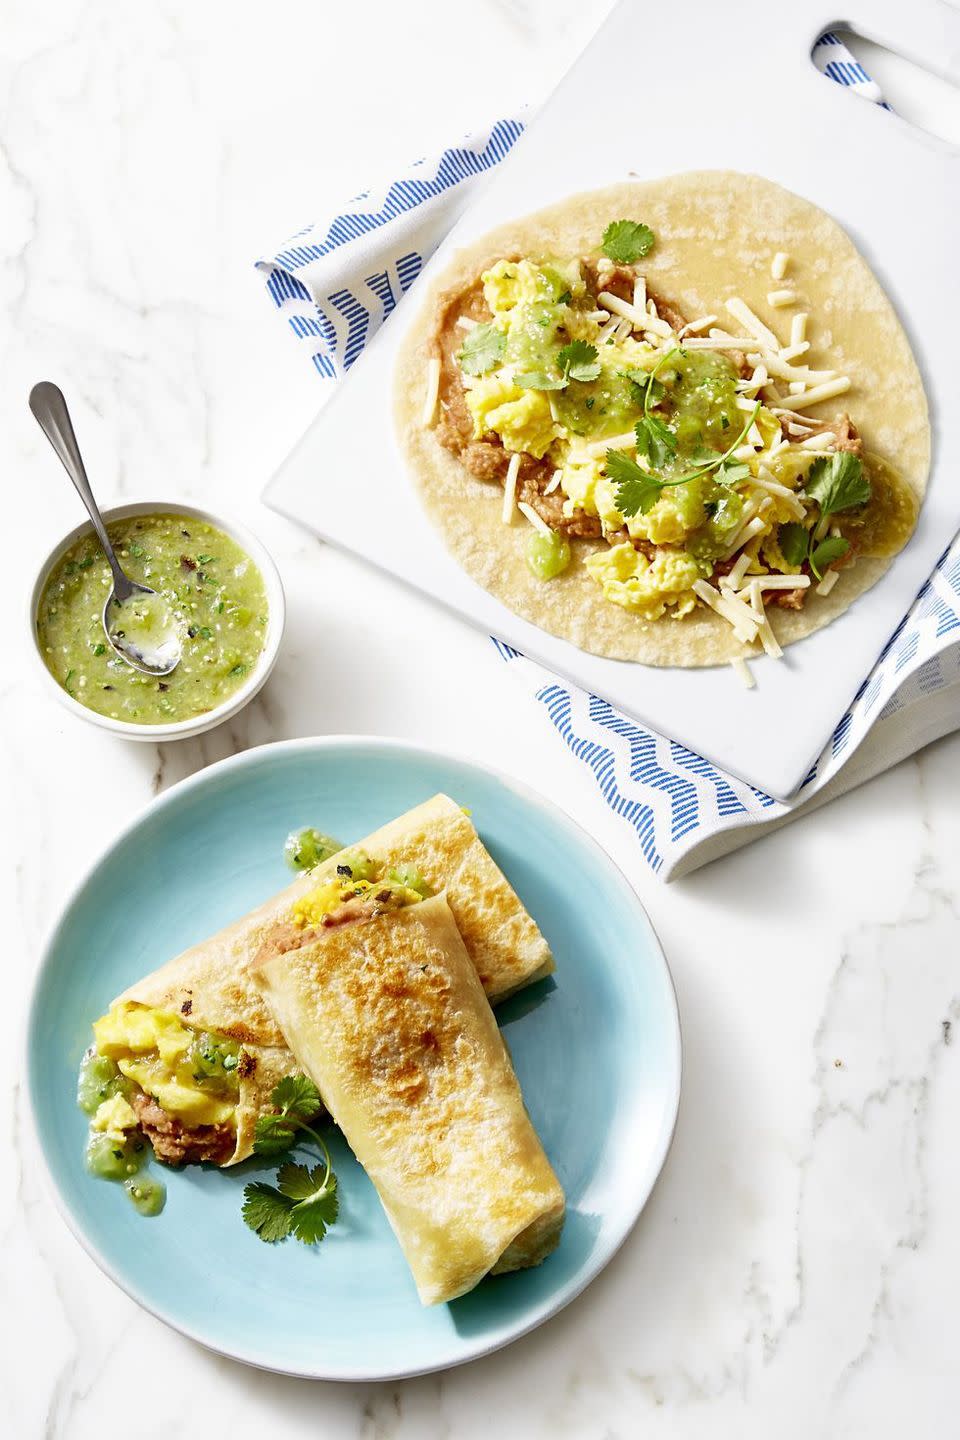 Make-Ahead Breakfast Burrito